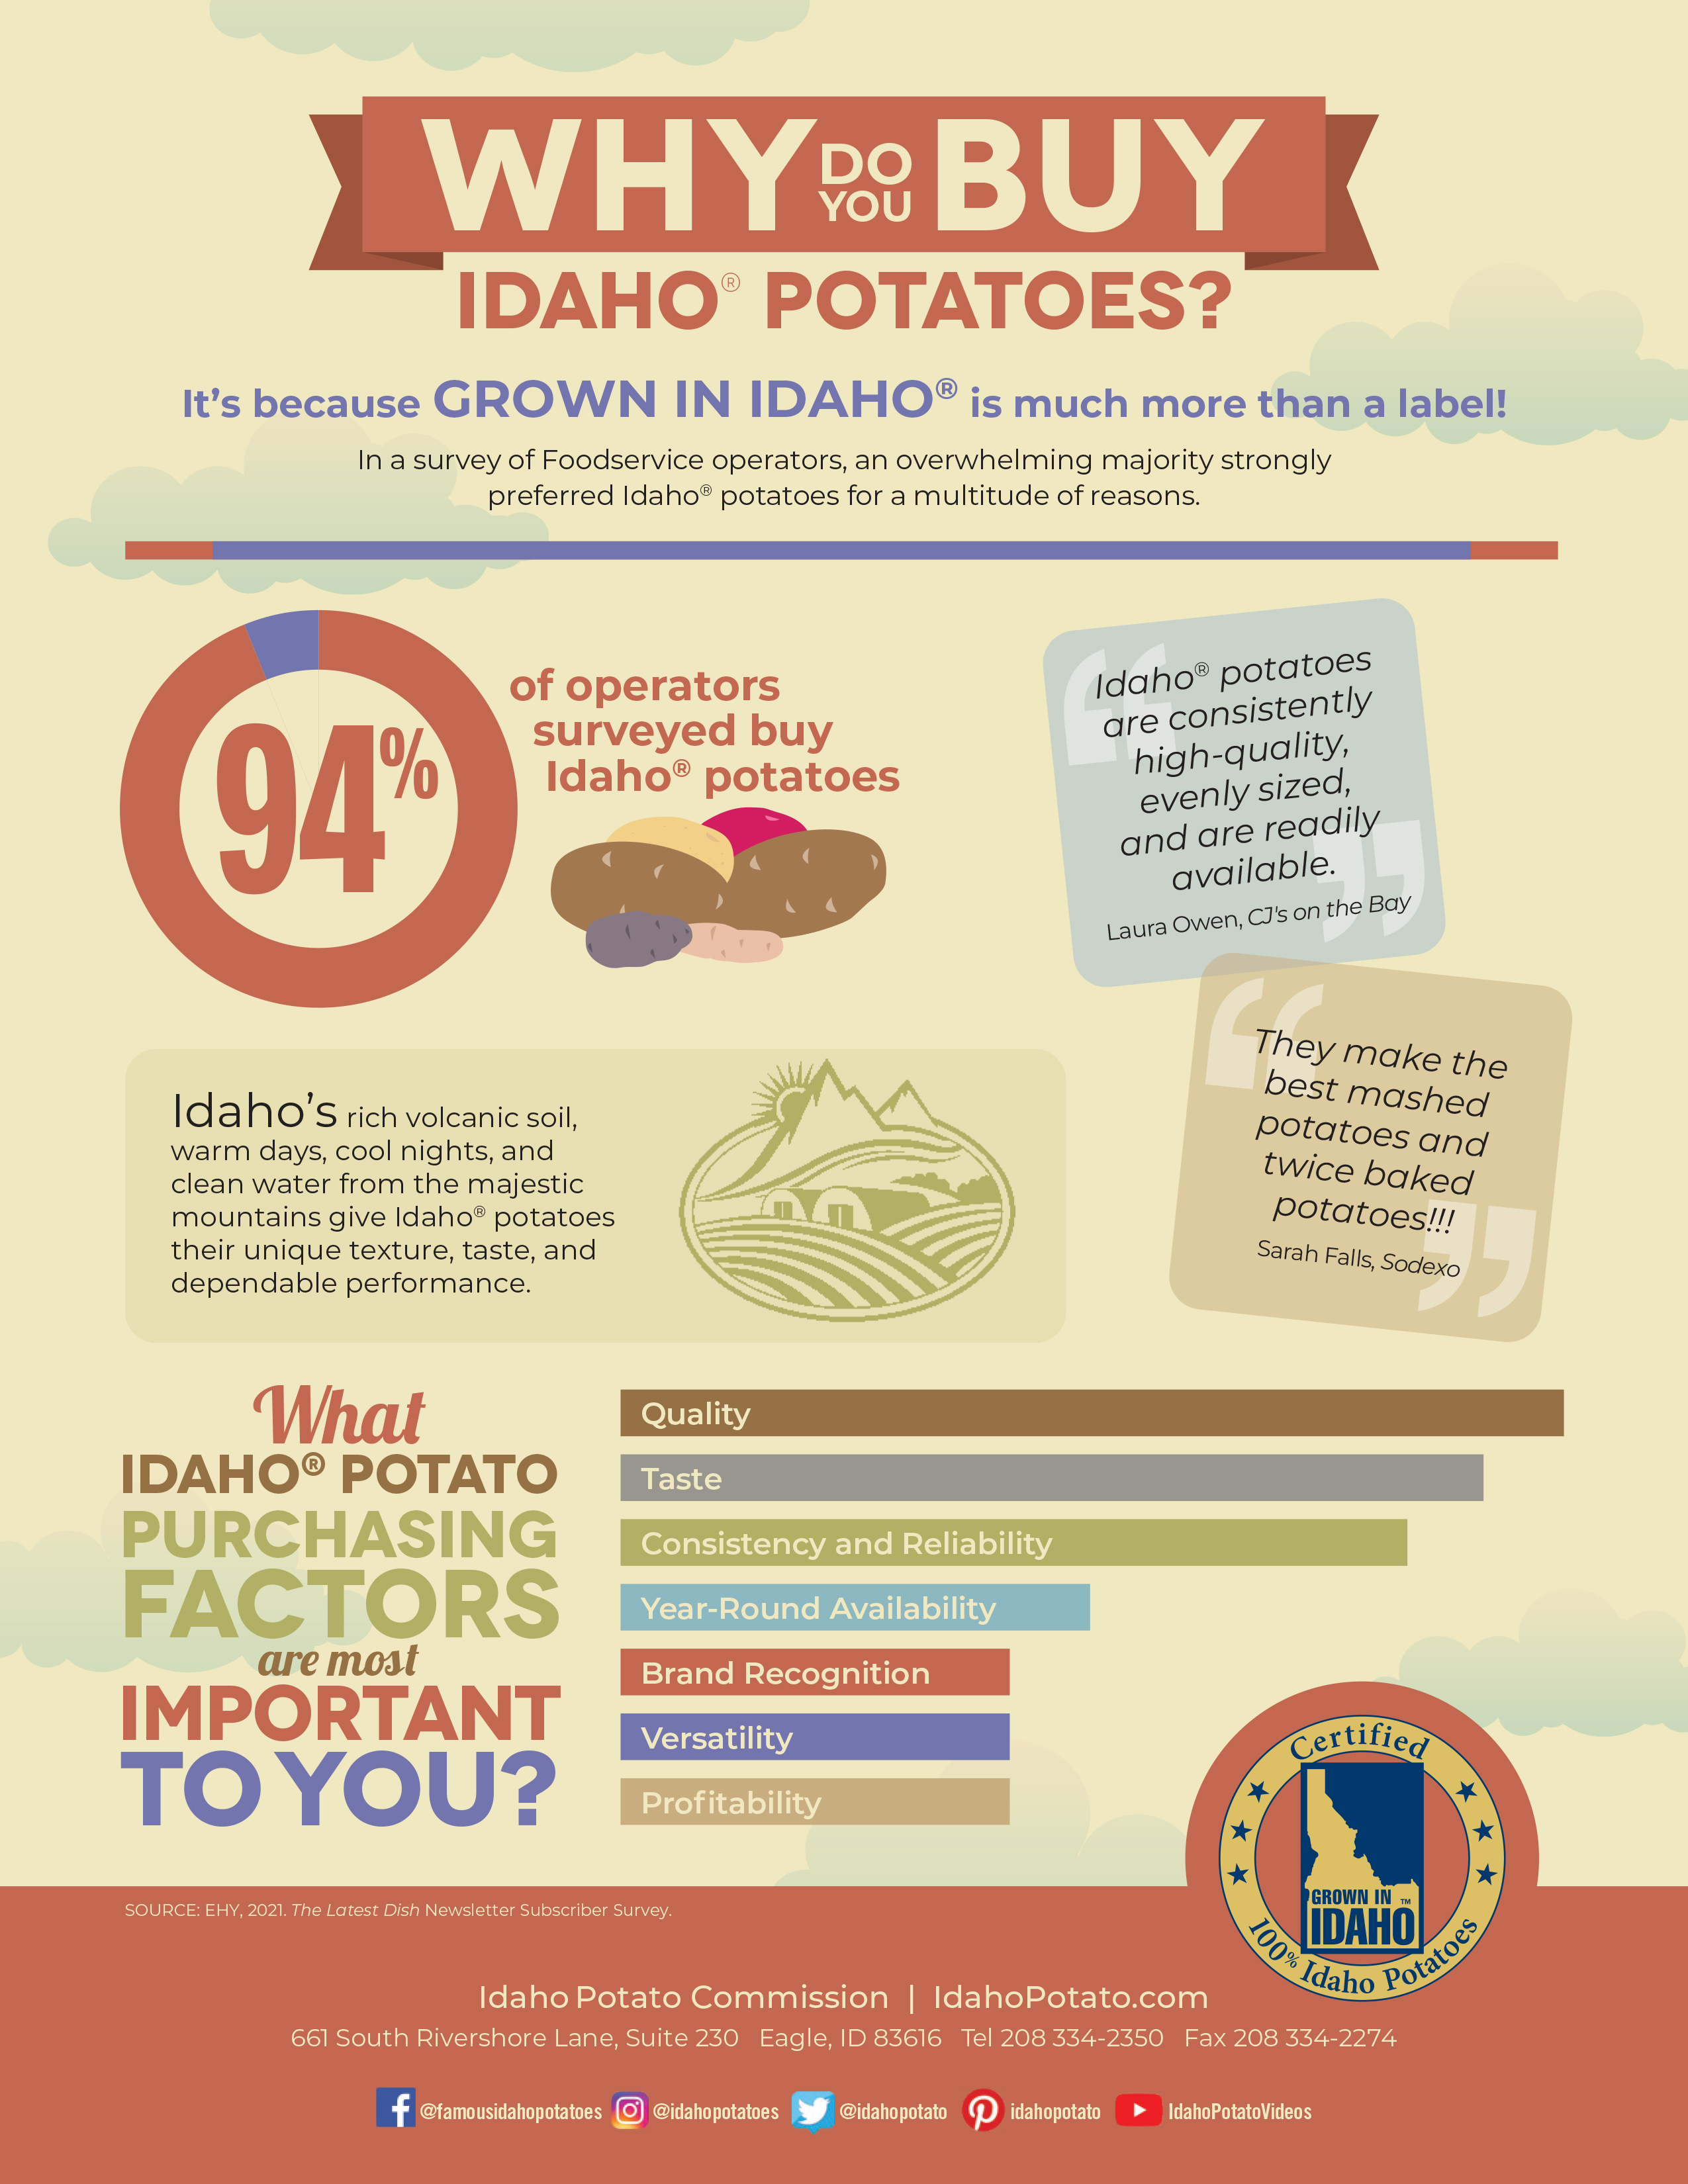 Why Do You Buy Idaho® Potatoes?